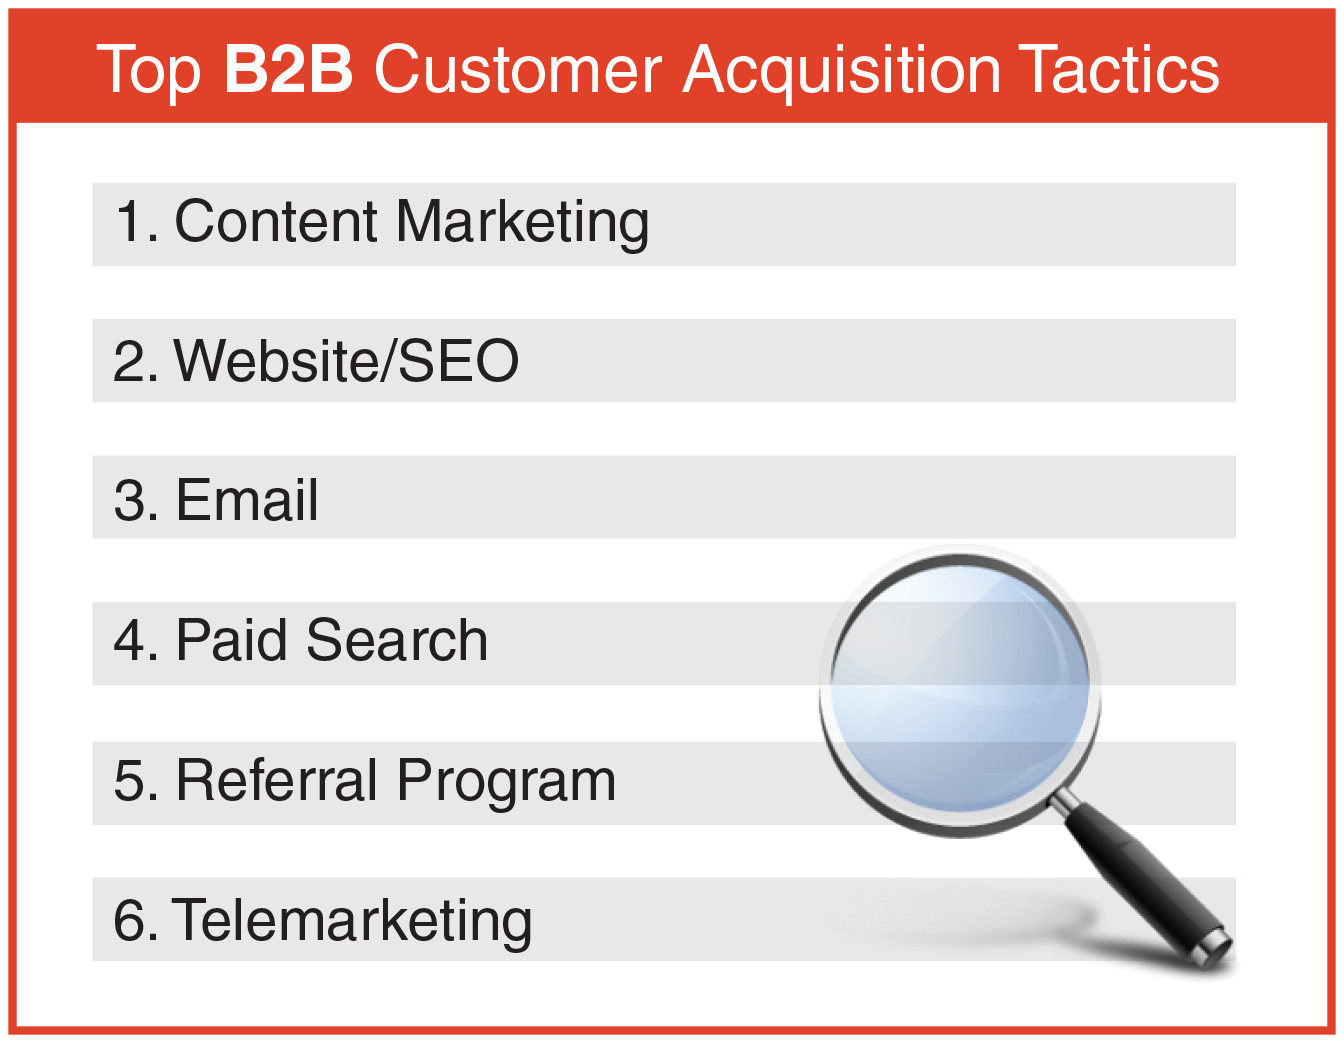 B2B Customer Acquisition Tactics